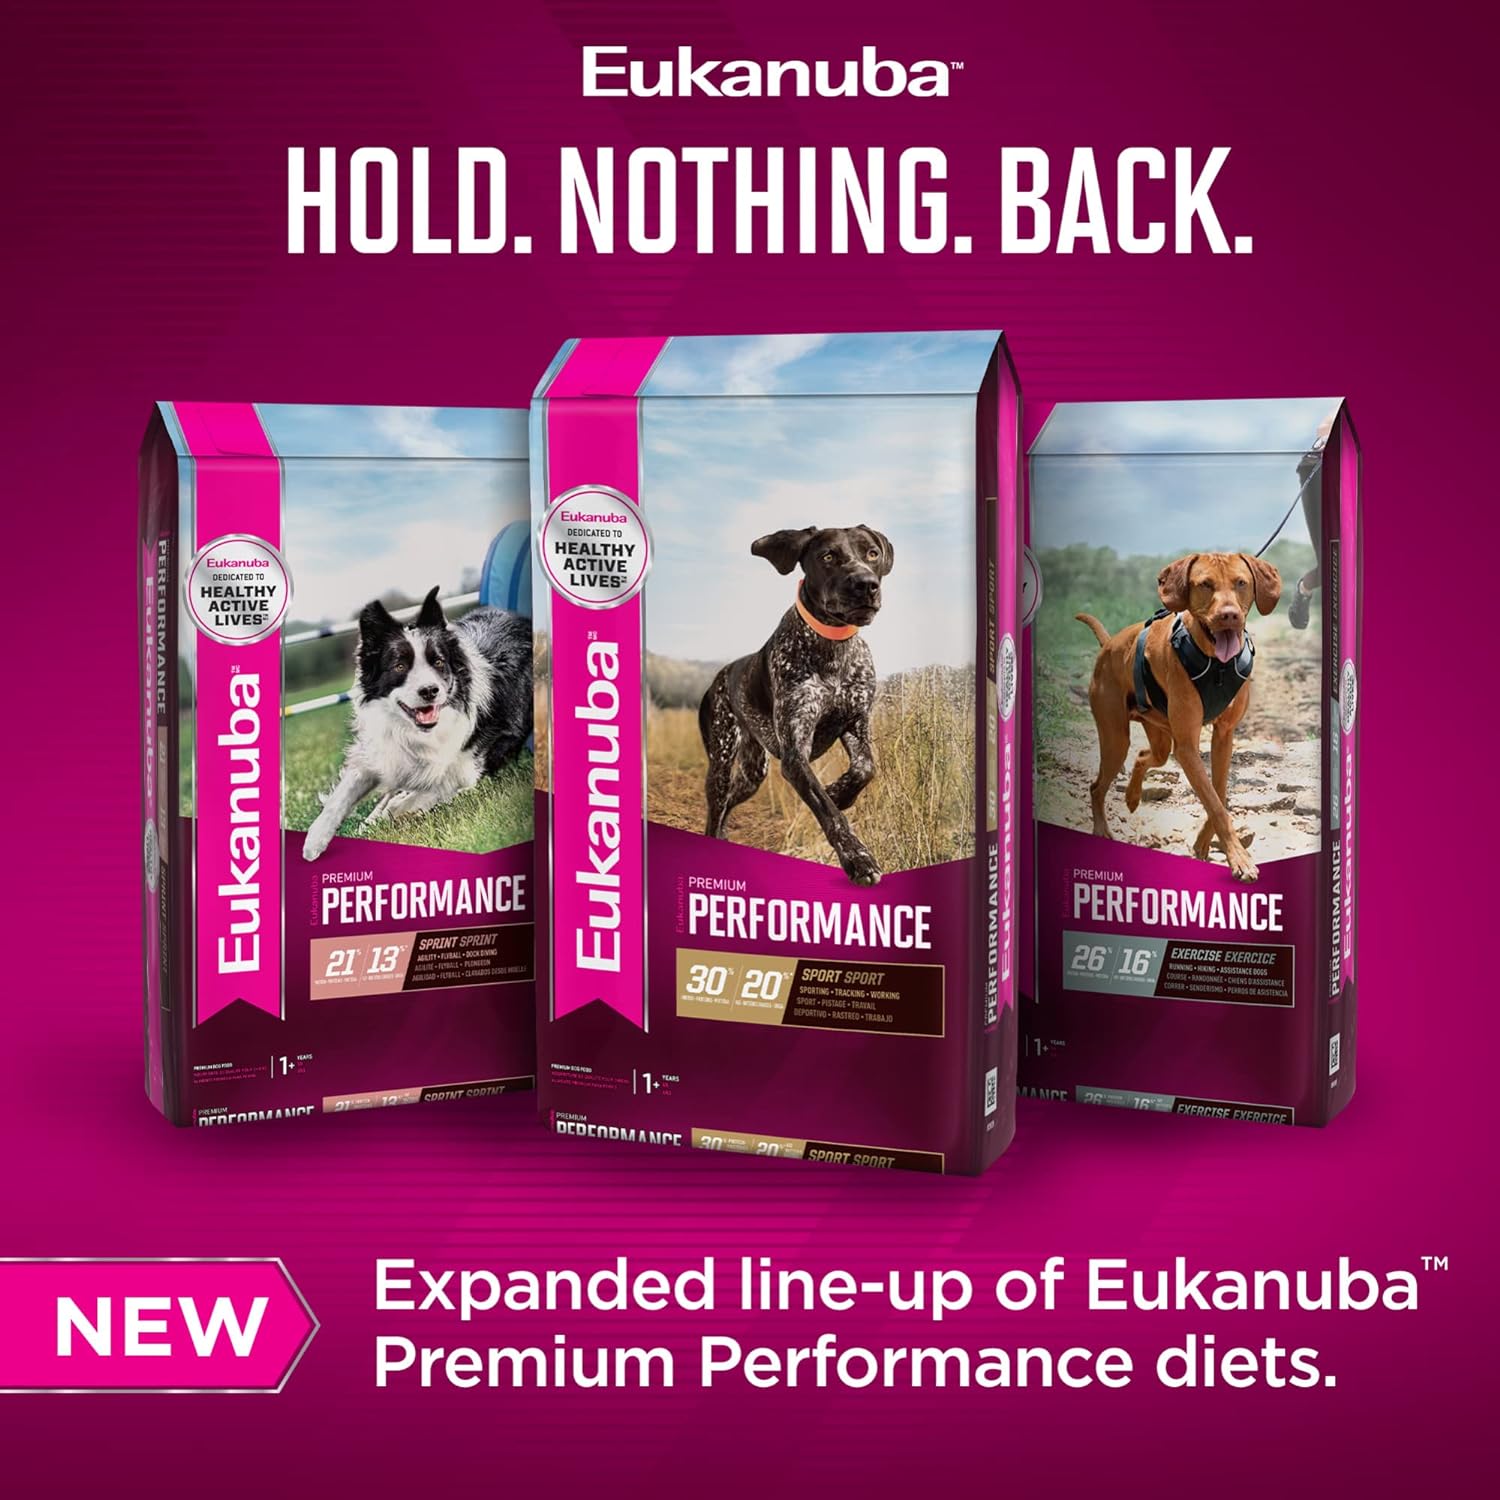 Eukanuba Premium Performance 30/20 Sport Dry Dog Food – Gallery Image 7